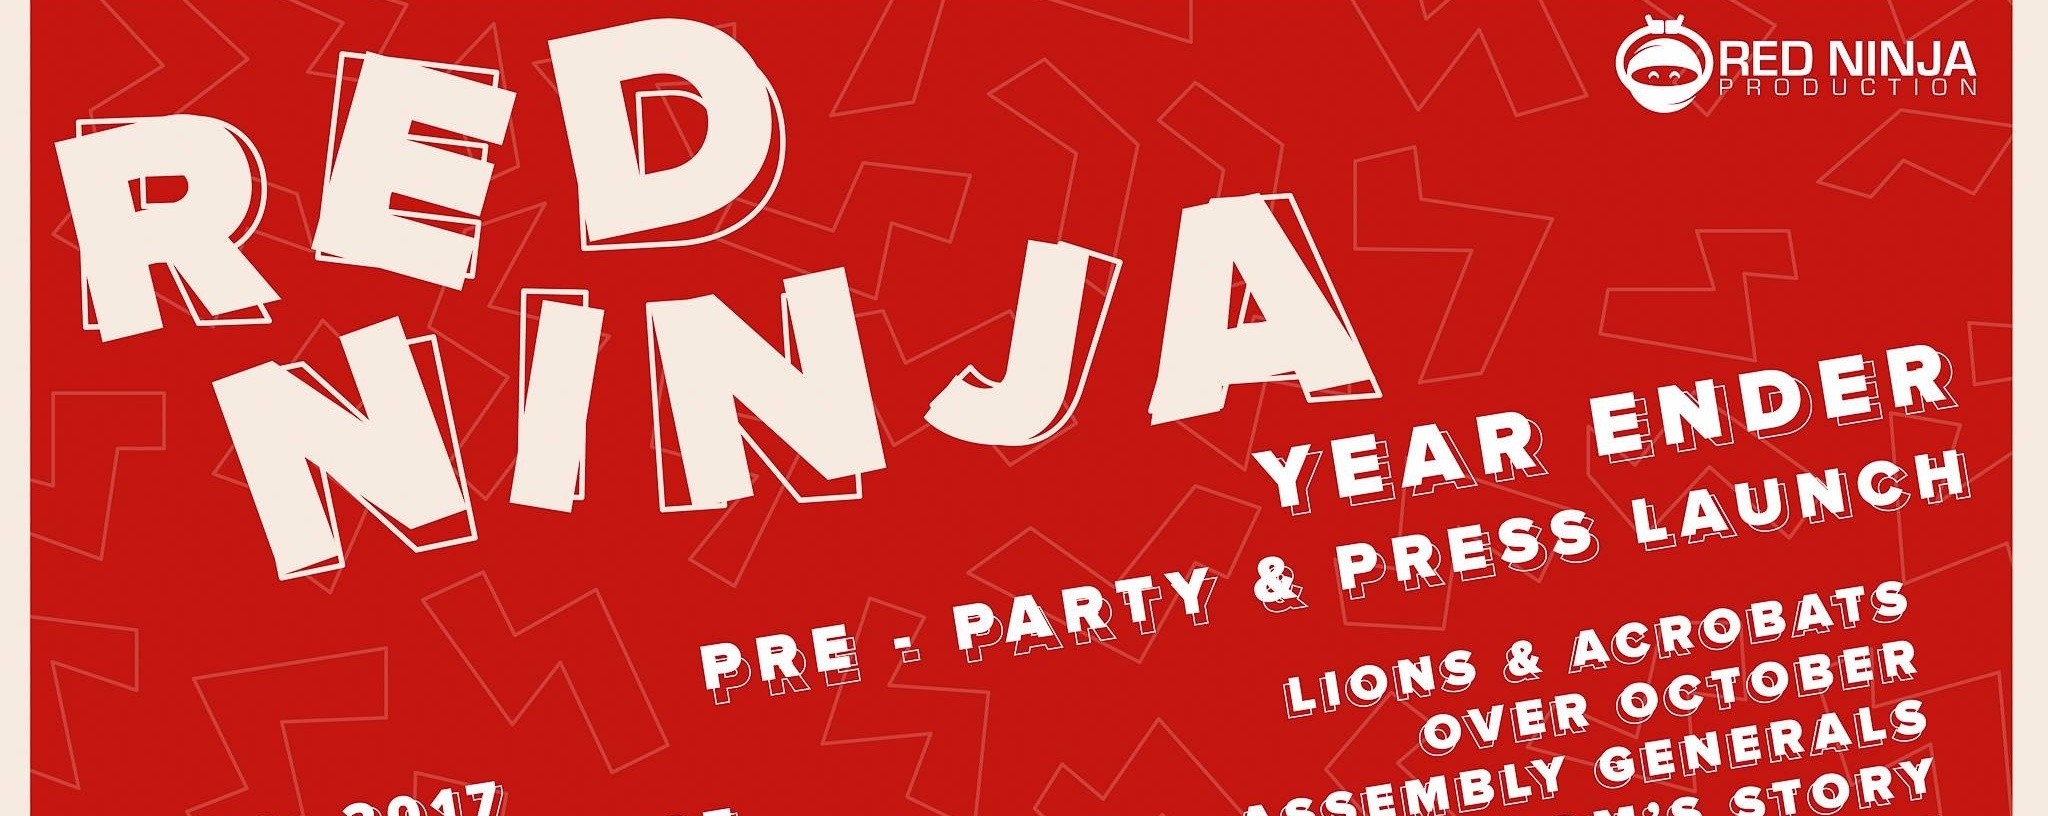 Red Ninja Year Ender Pre Party!